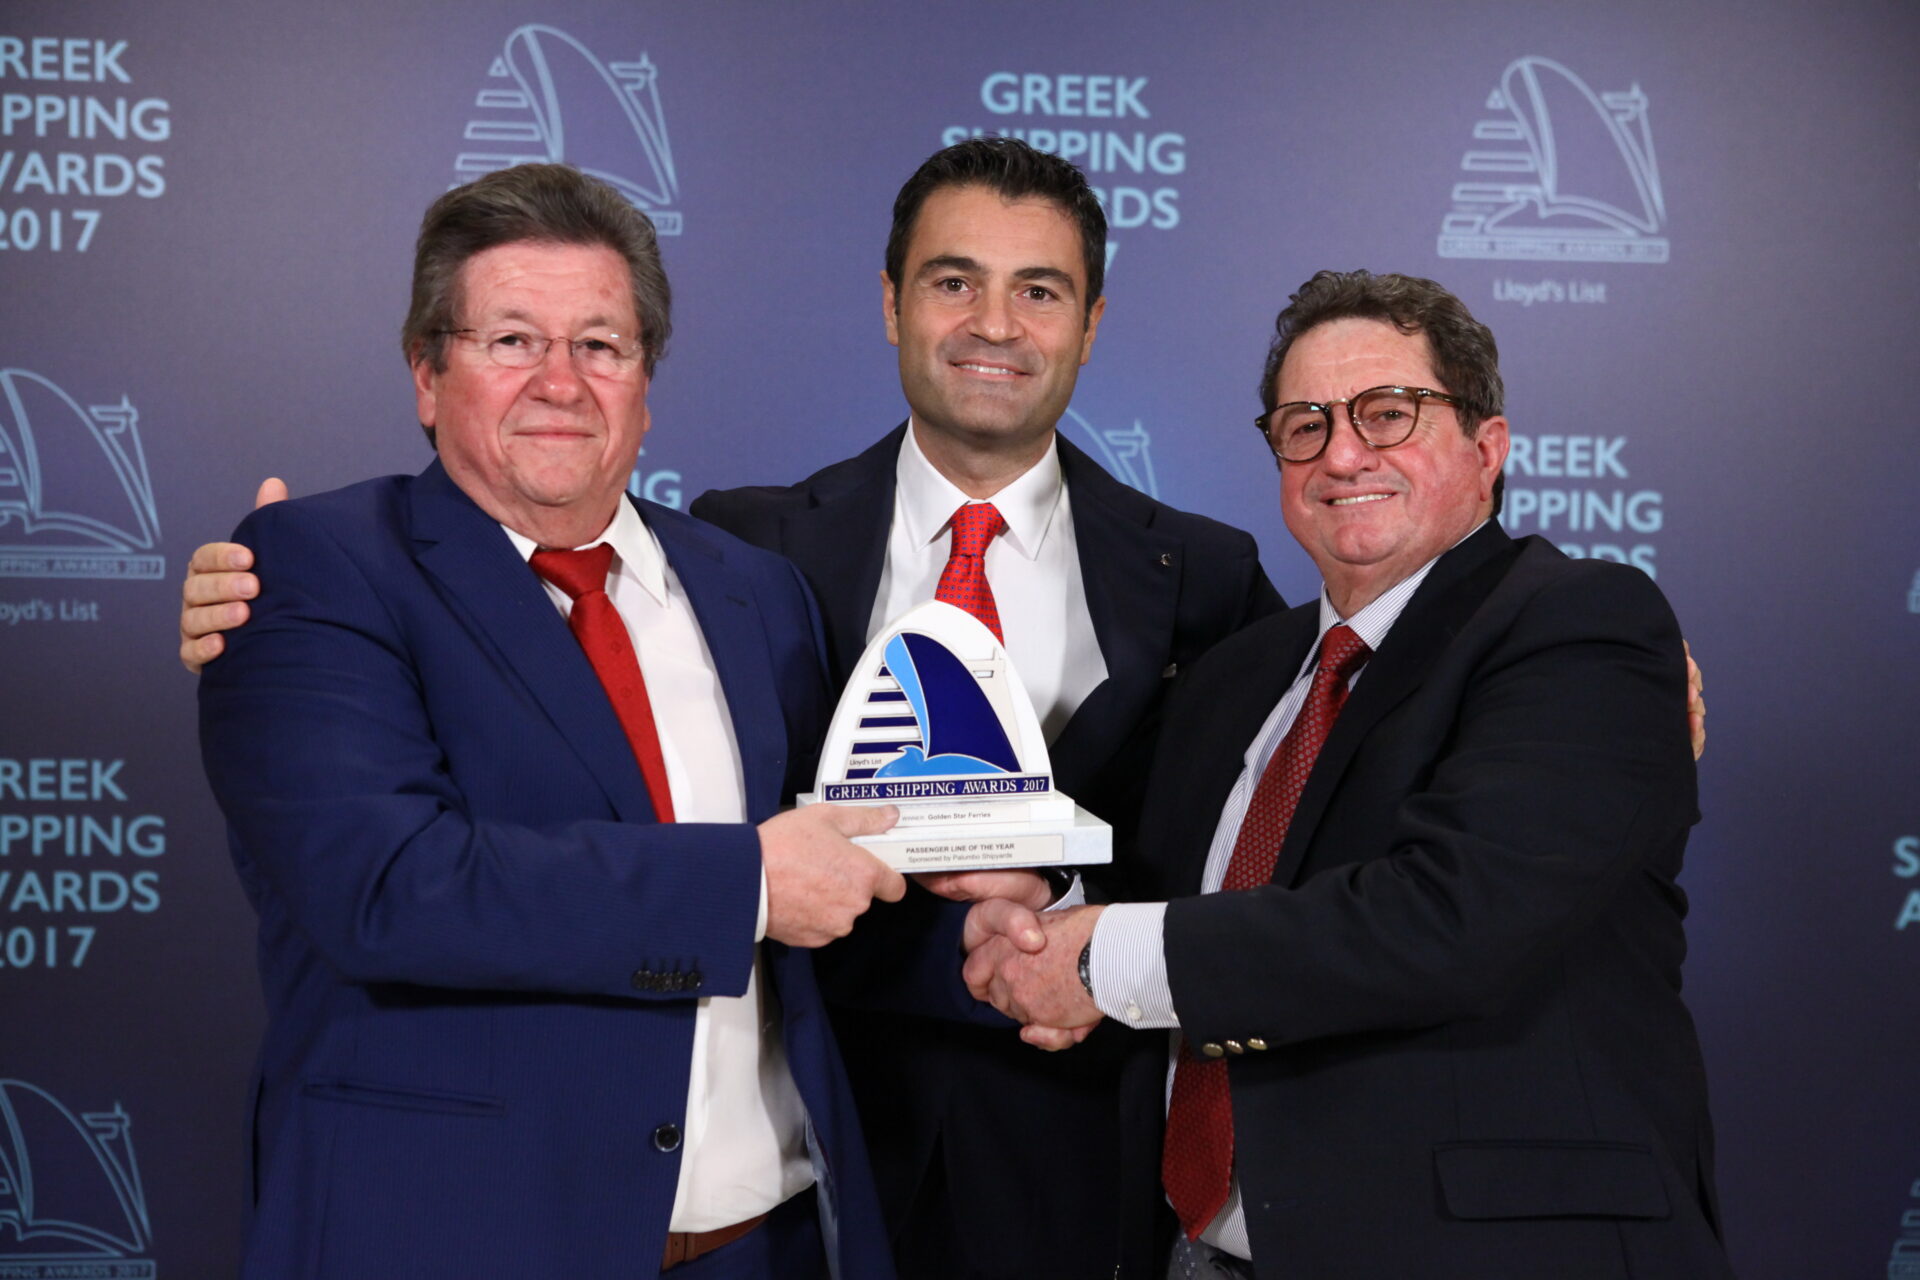 Raffaele Palumbo of sponsor Palumbo Shipyards (centre) presenting the Passenger Line of the Year Award to George Stefanou and Dimitris Stefanou of Golden Star Ferries.